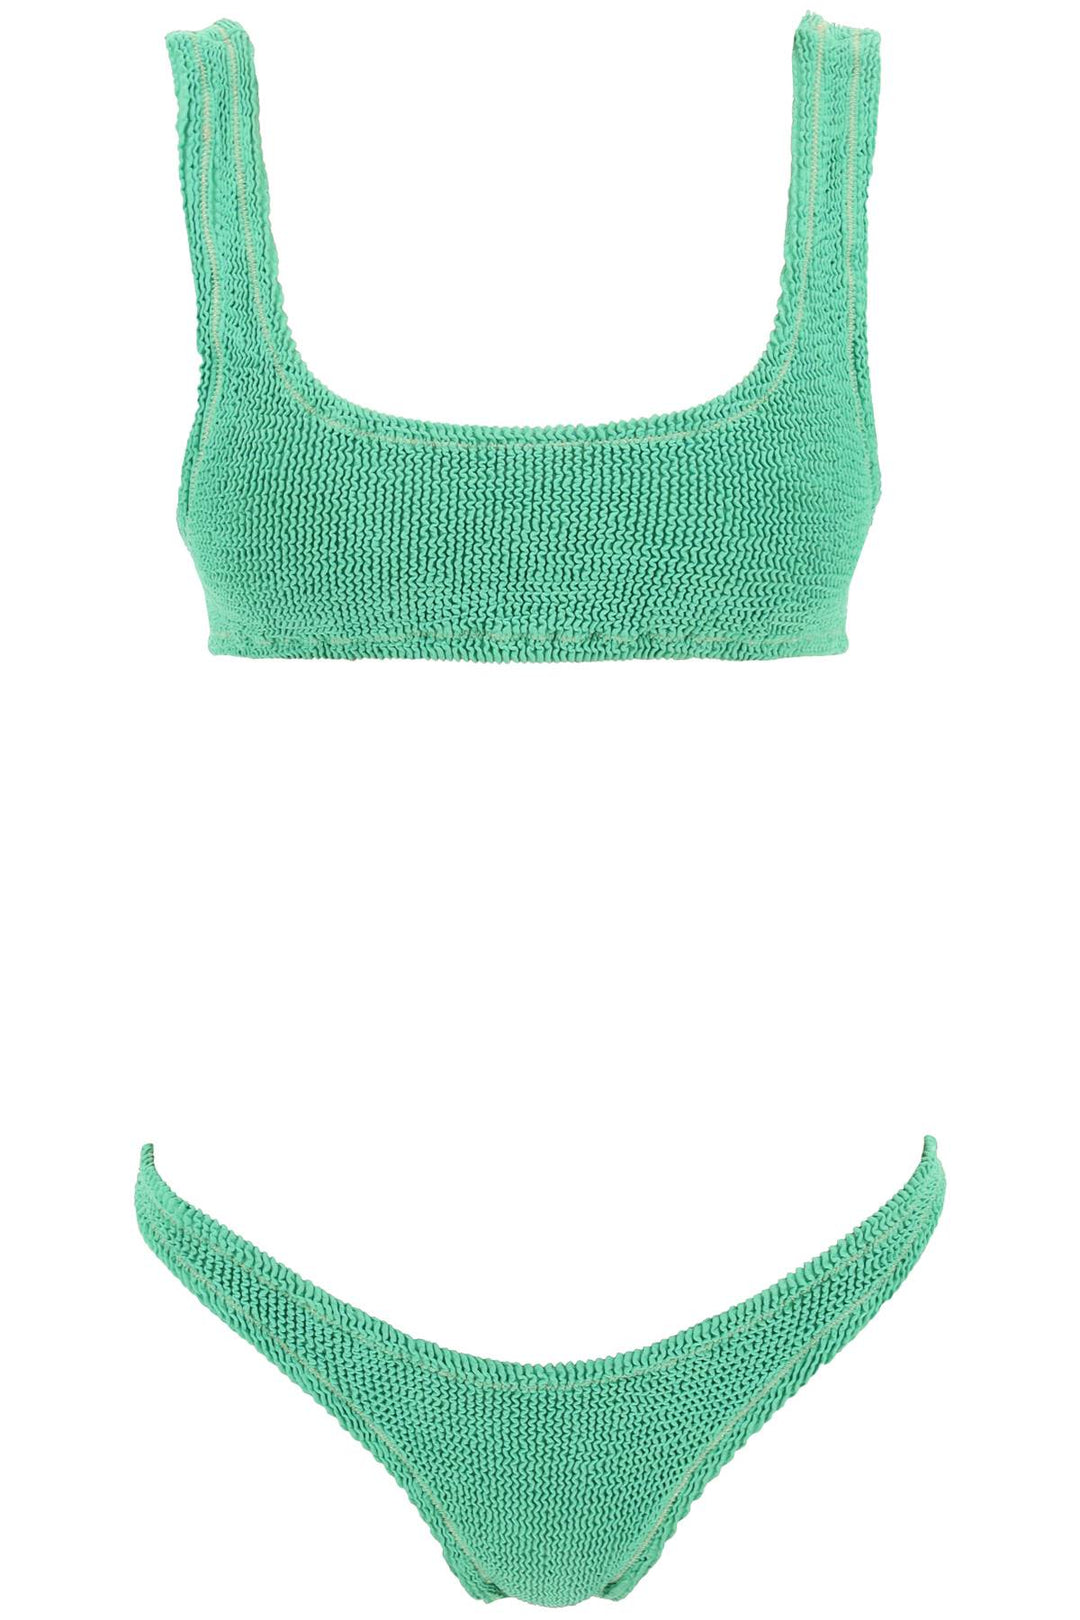 Reina Olga Ginny Bikini Set   Verde